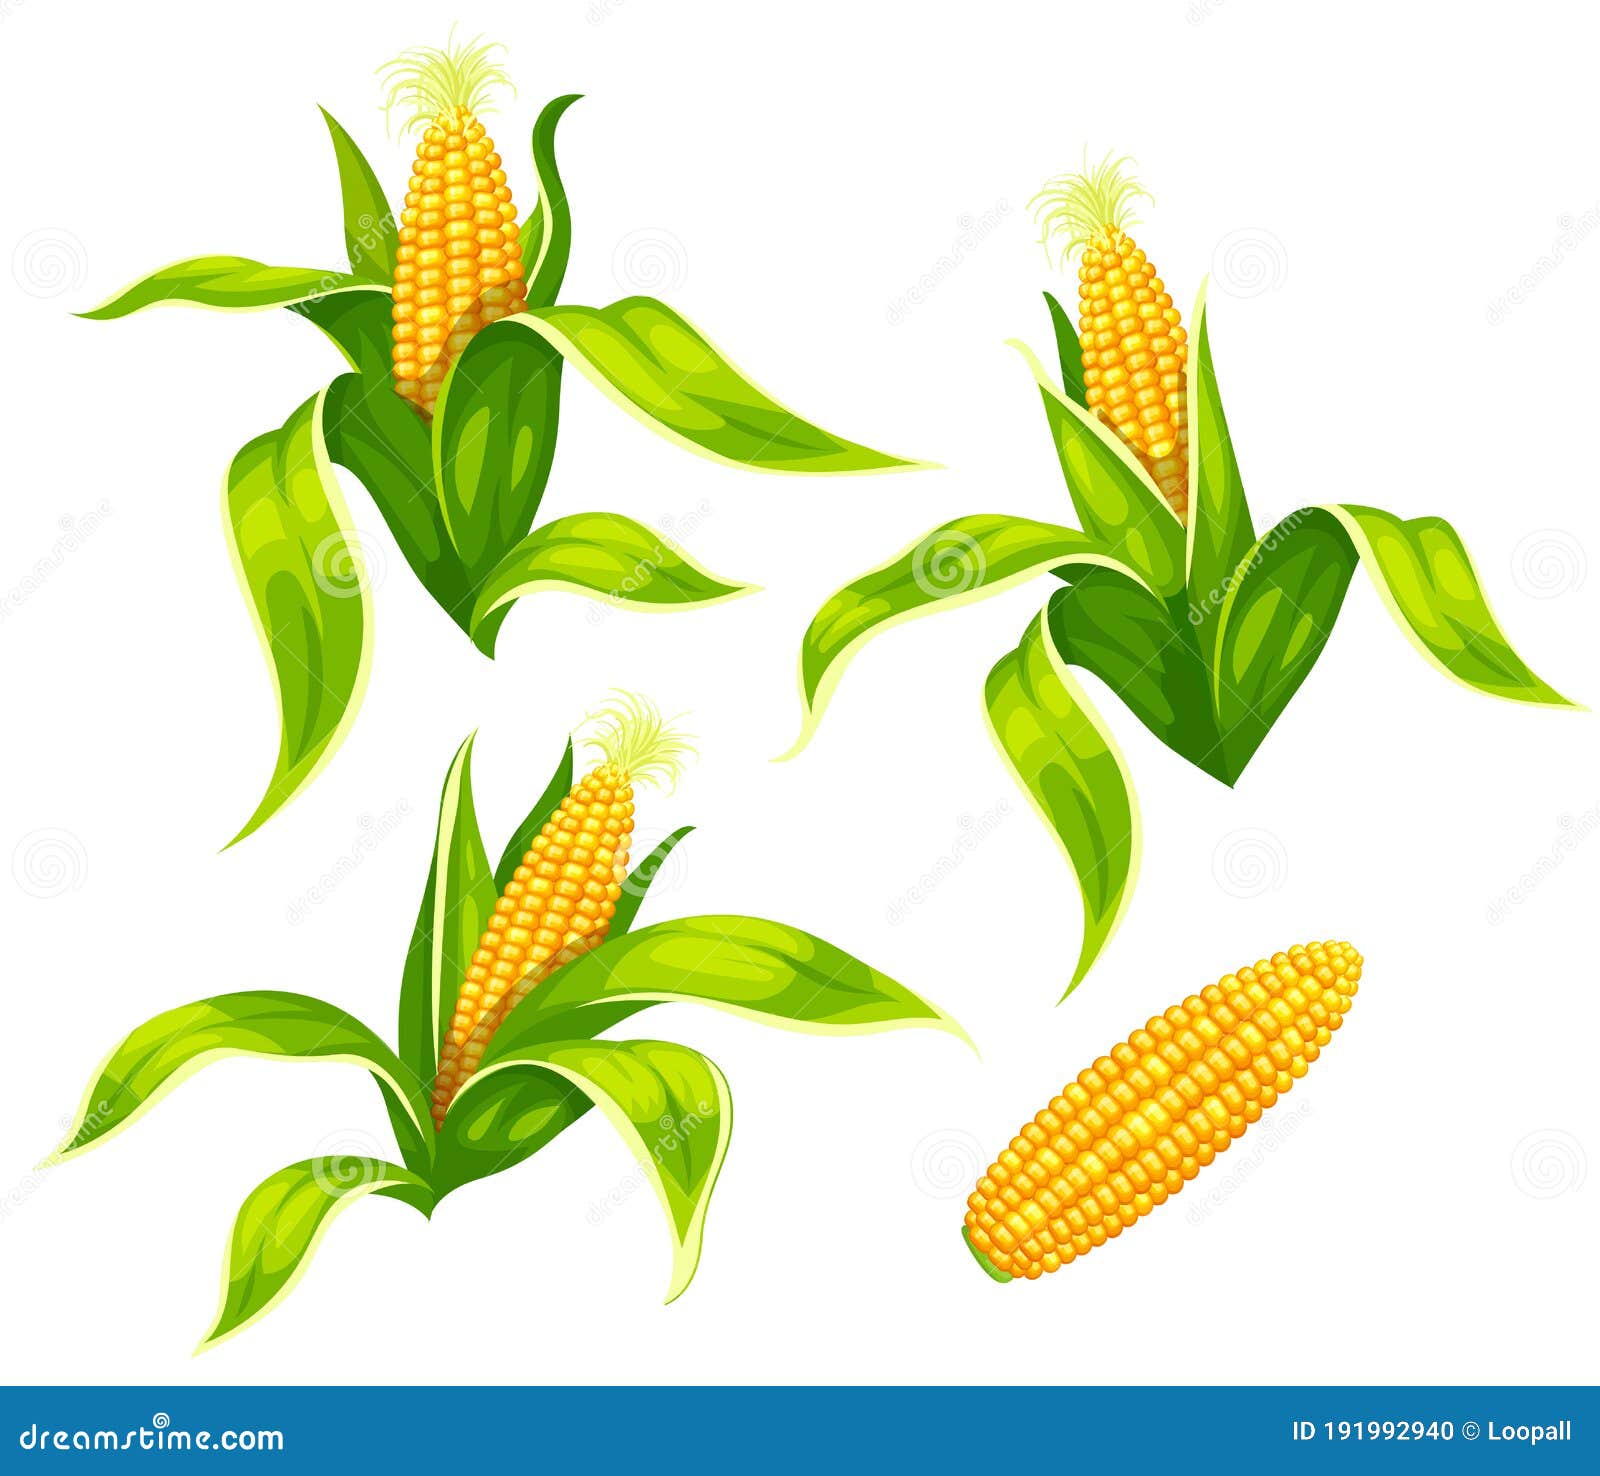 Maize Corn Cobs Isolated Vector Set Stock Illustration - Illustration ...